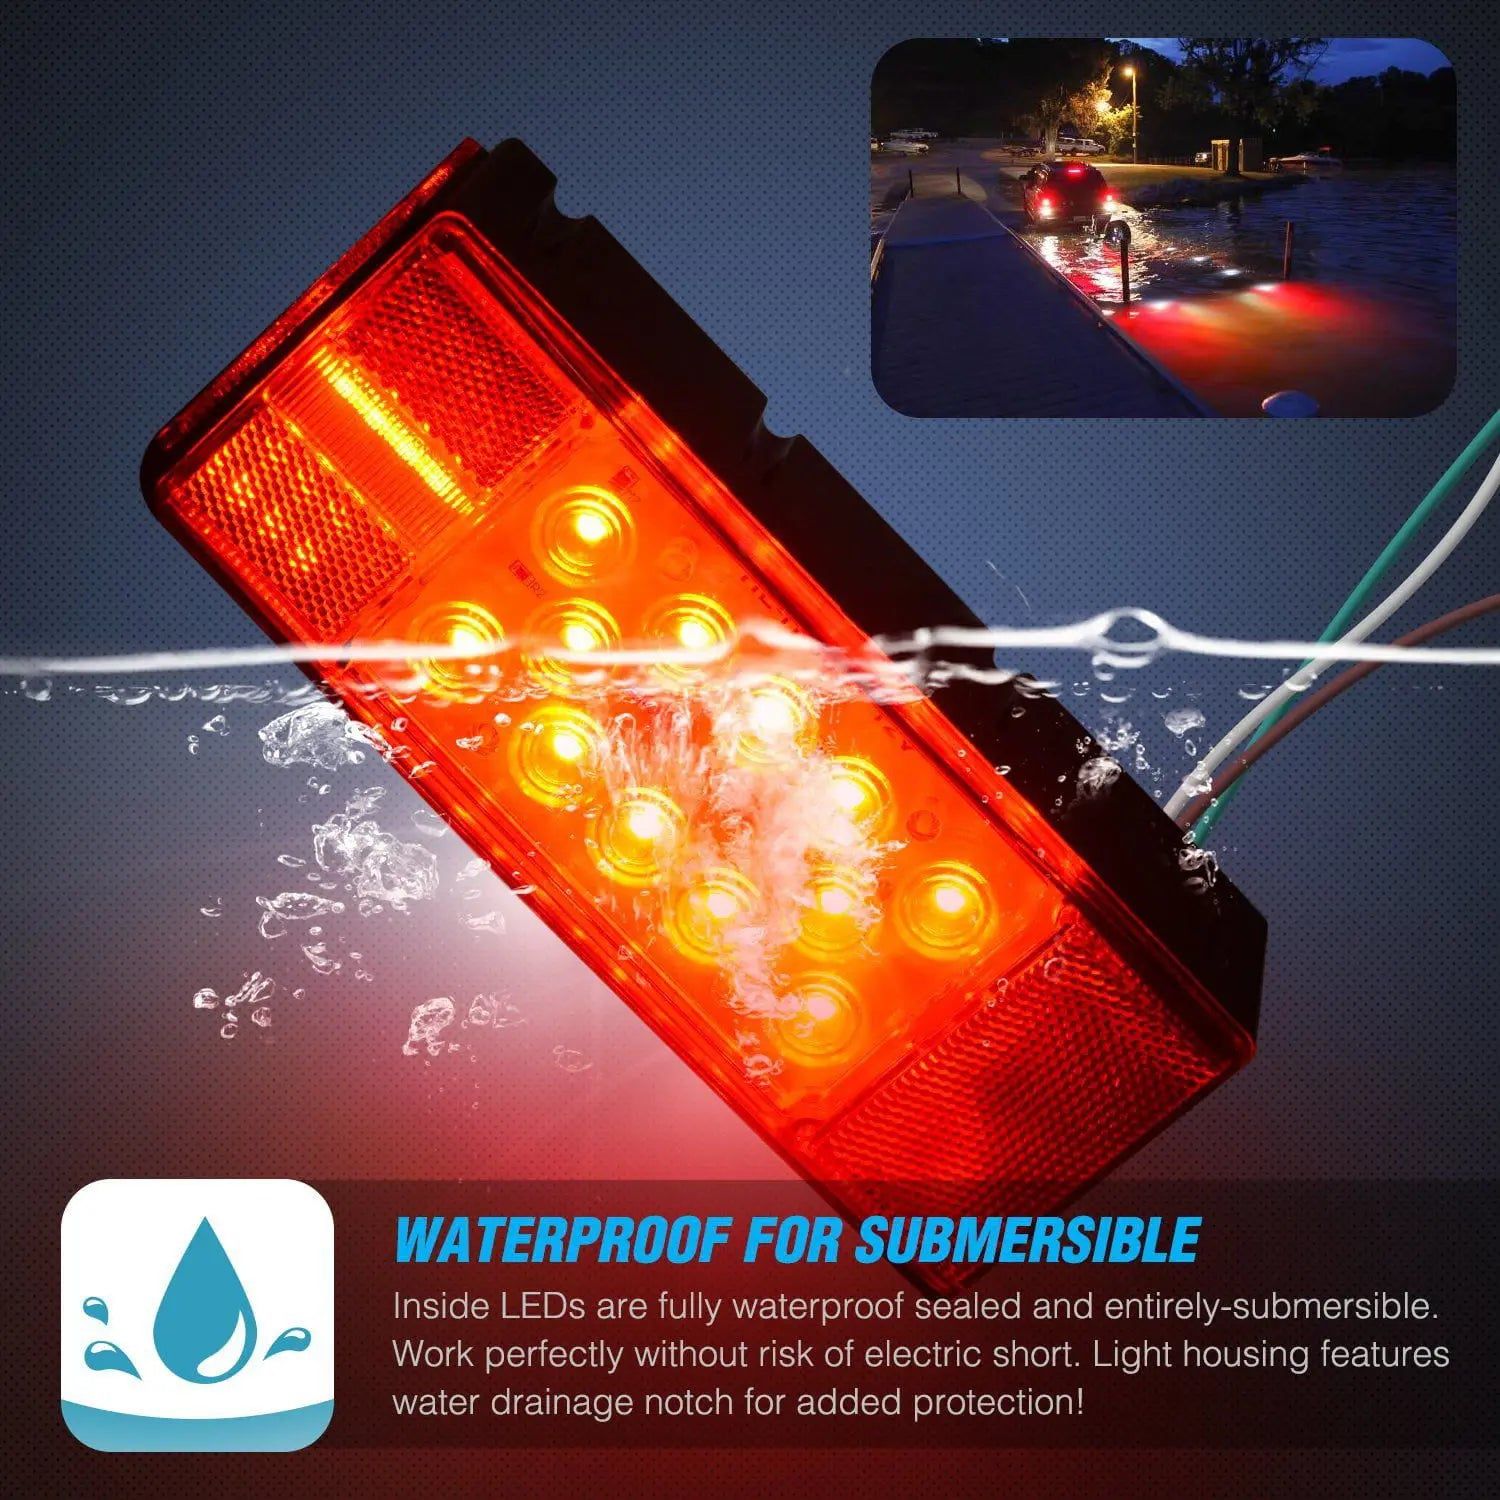 Trailer Light Submersible Low Profile Rectangular LED Trailer Light Kit (Pair)